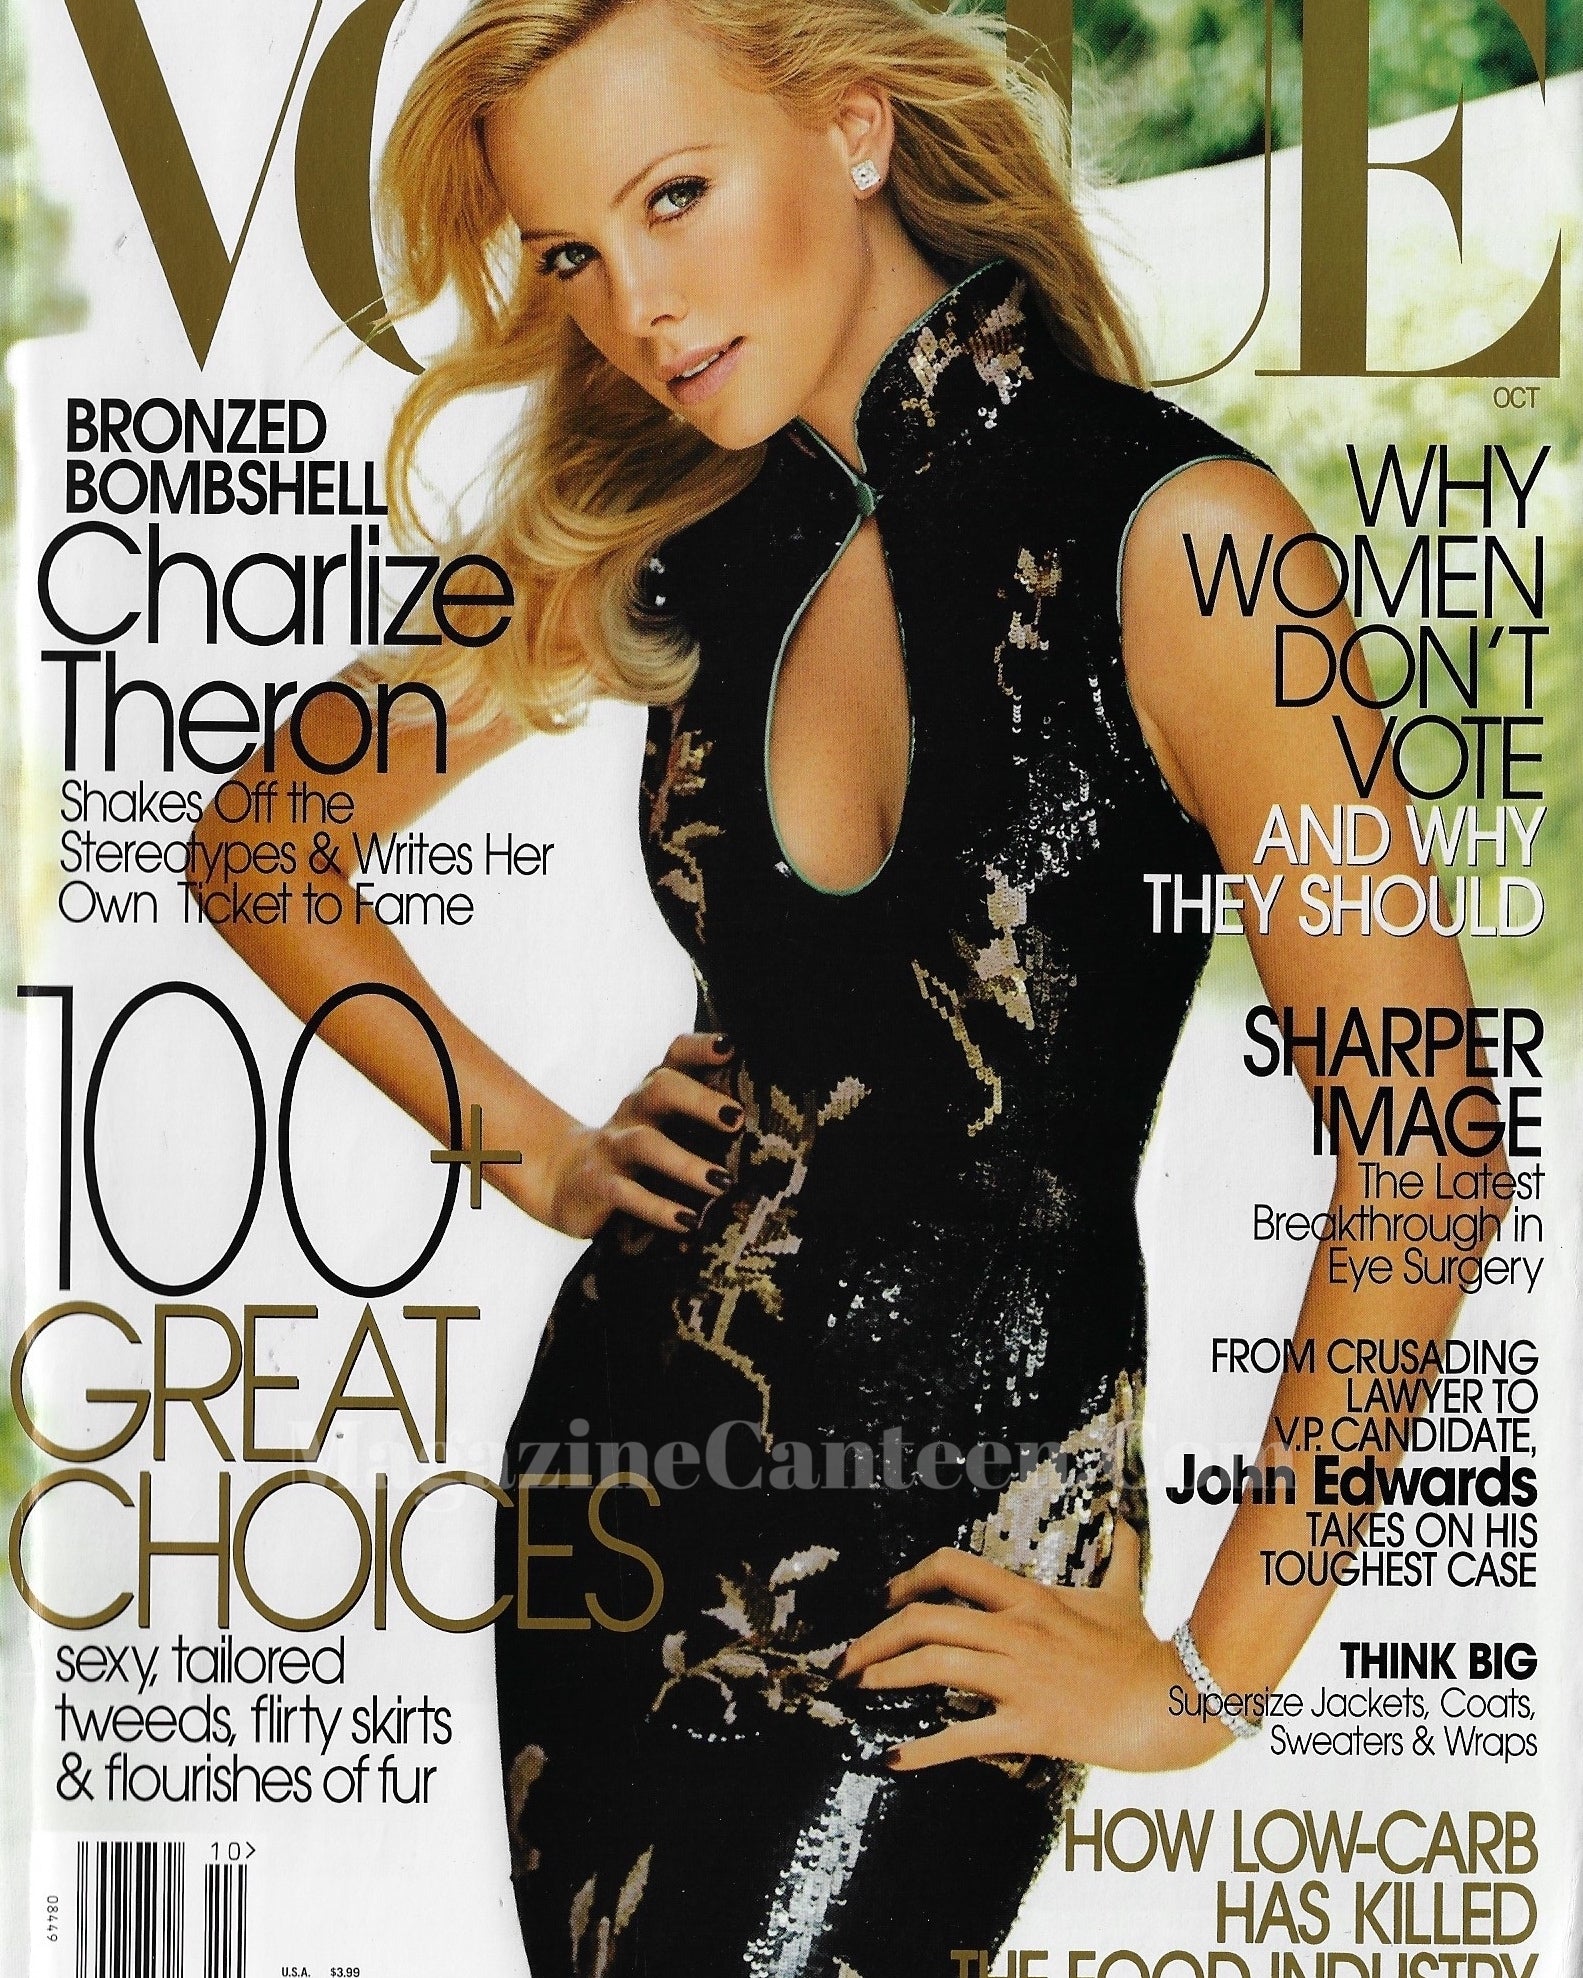  Vogue USA Magazine October 2004 - Charlize TheroN